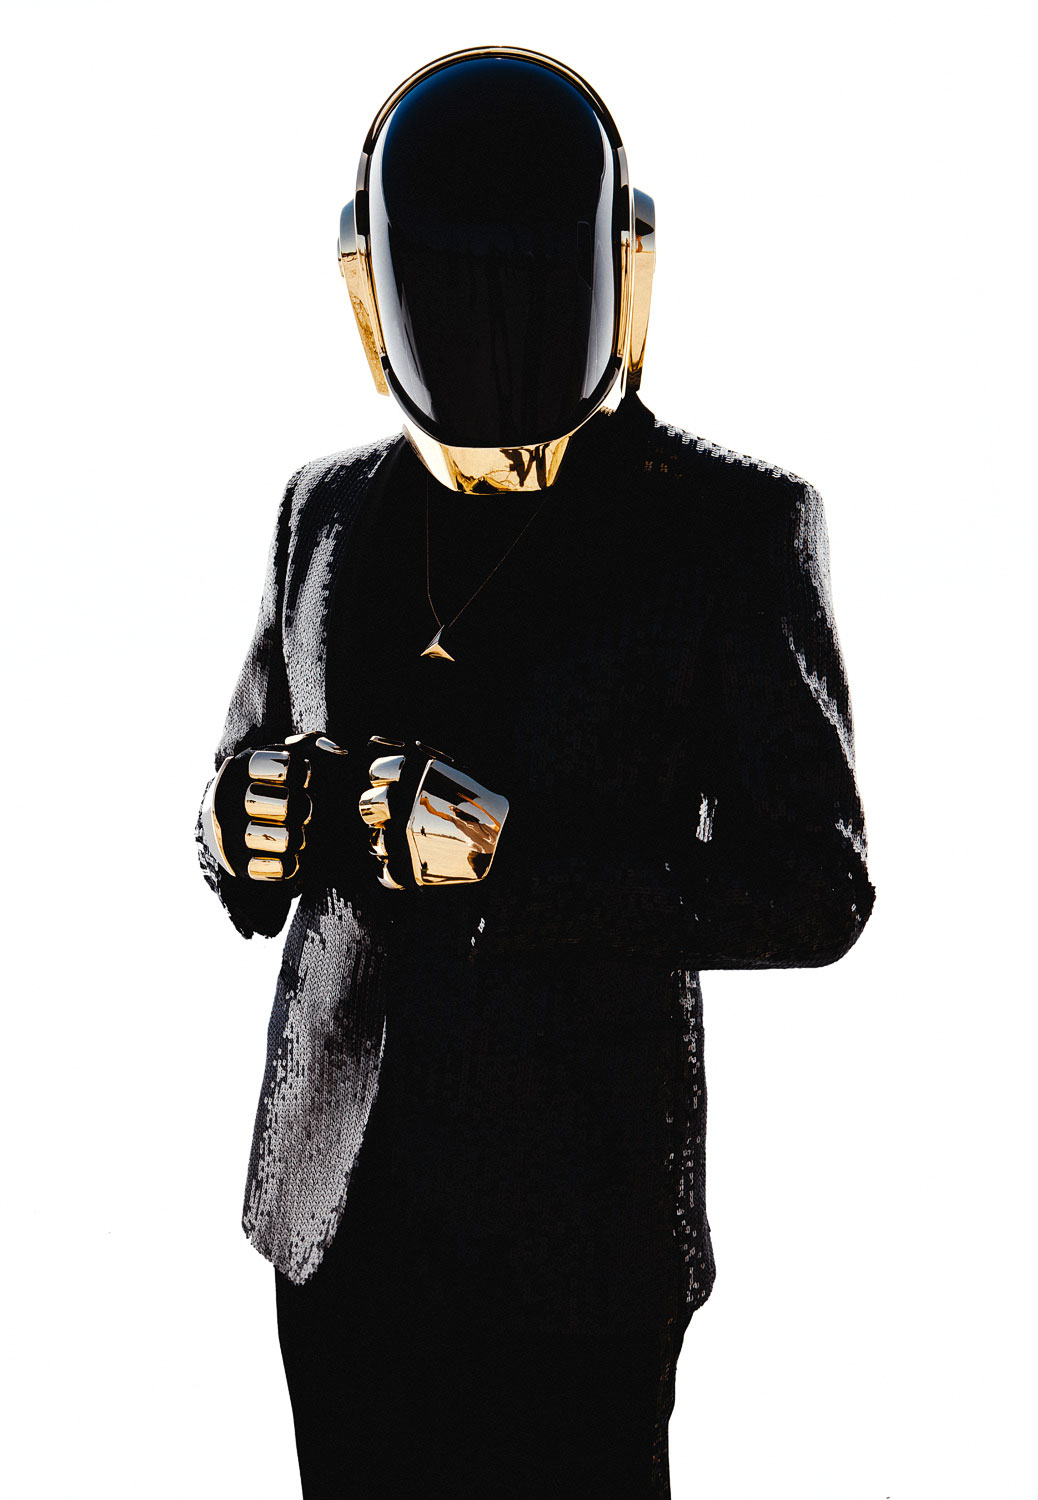 Images of Daft Punk | 1038x1500